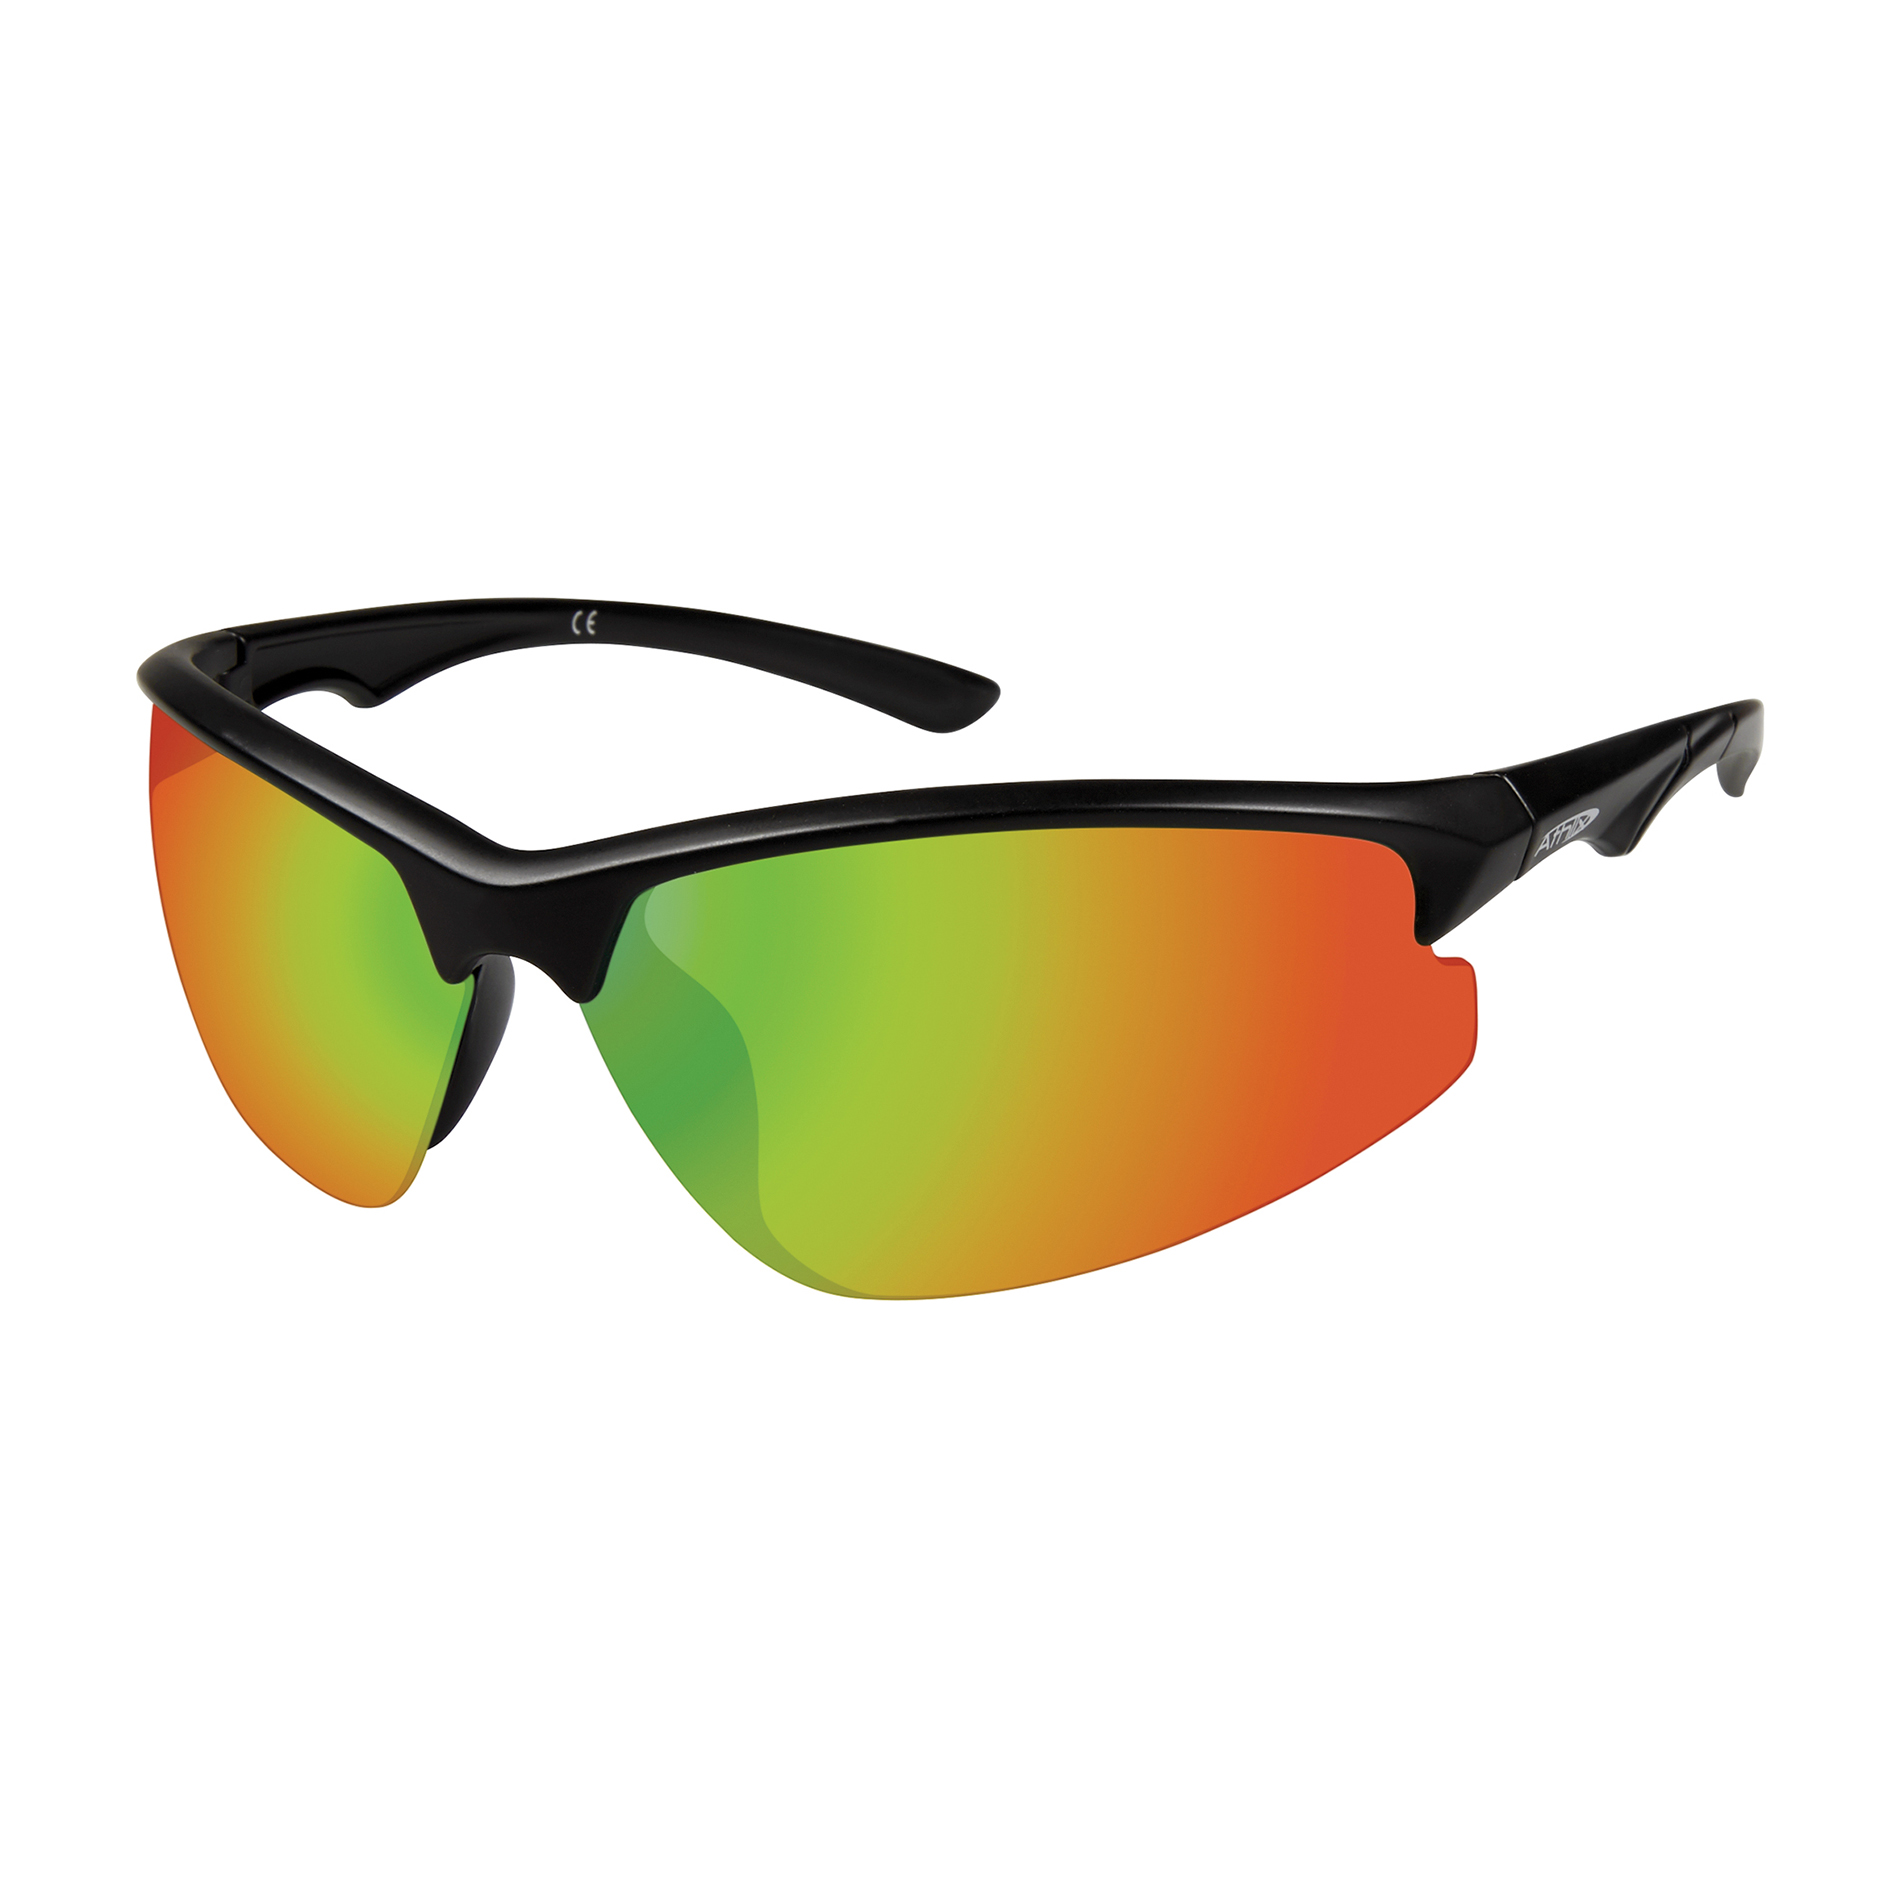 Men's Tinted Sport Sunglasses